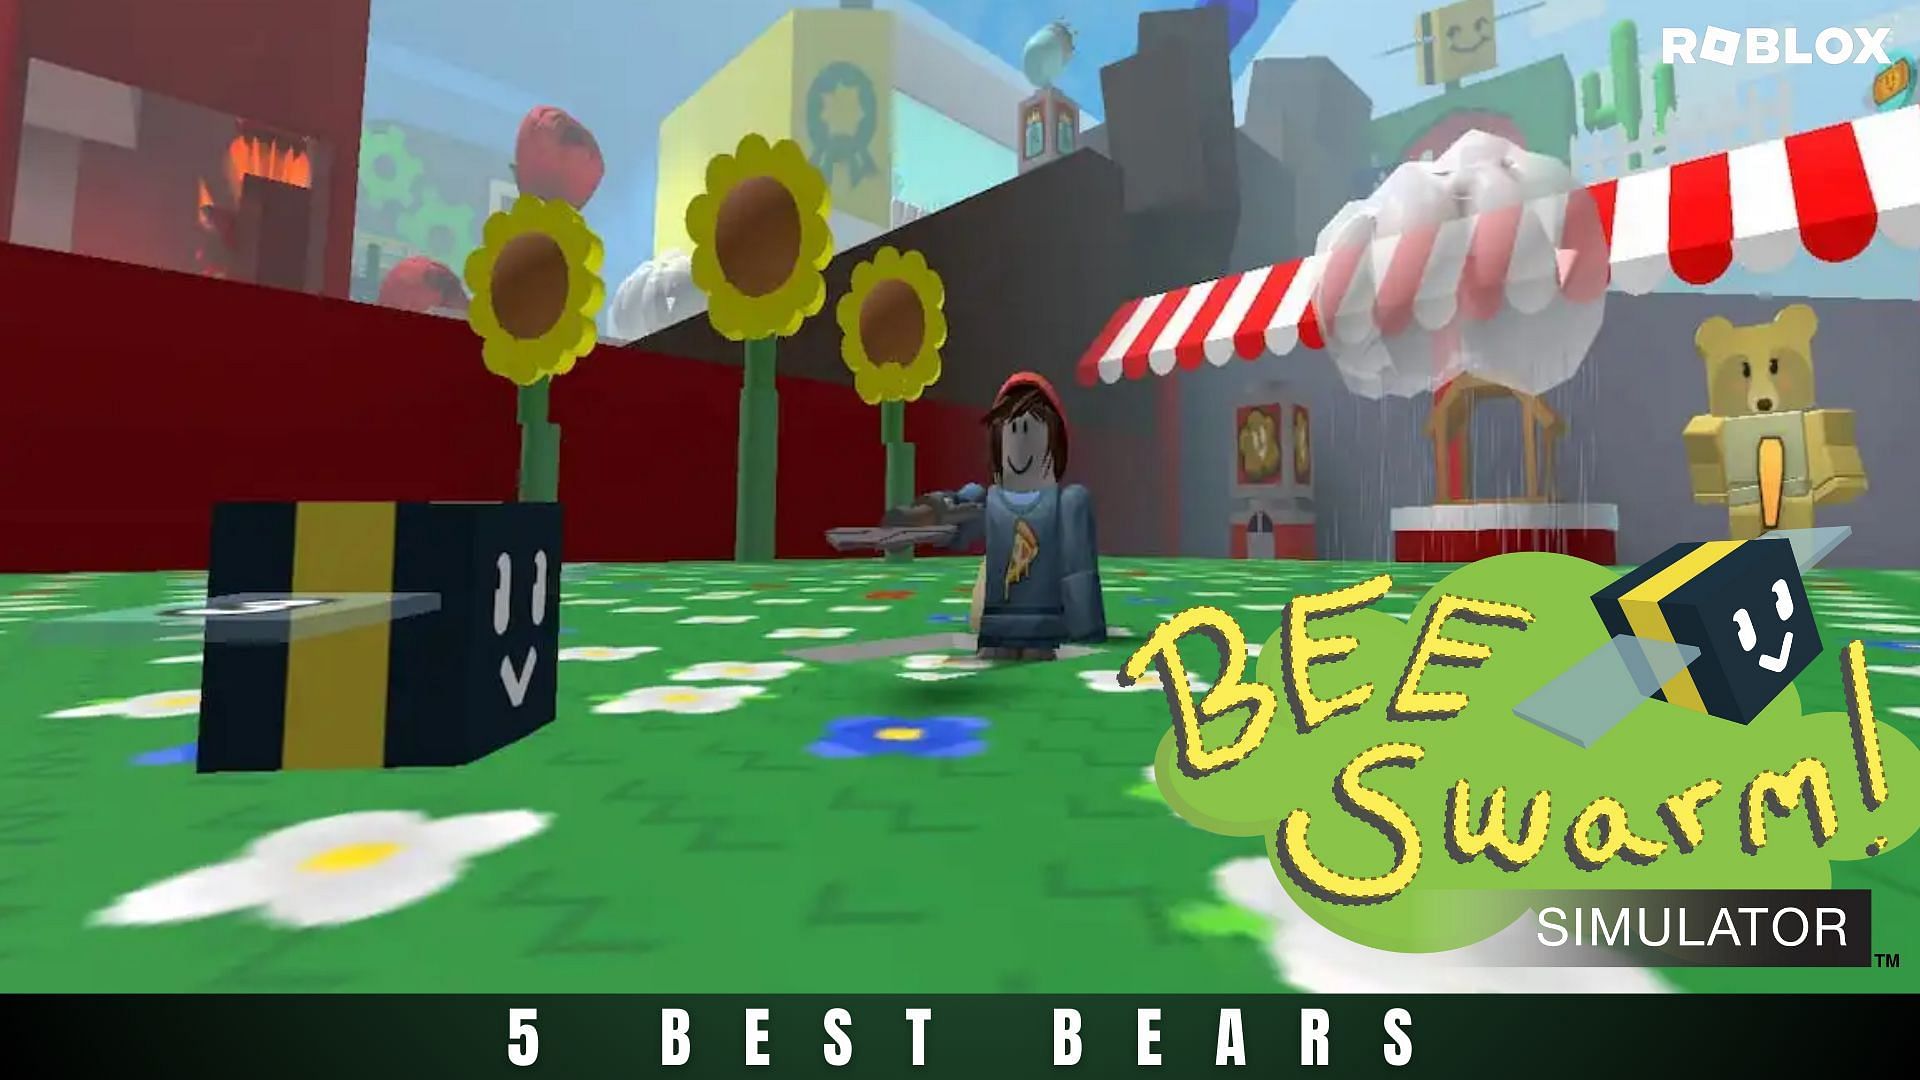 North Bear] Bees Journey Simulator! - Roblox